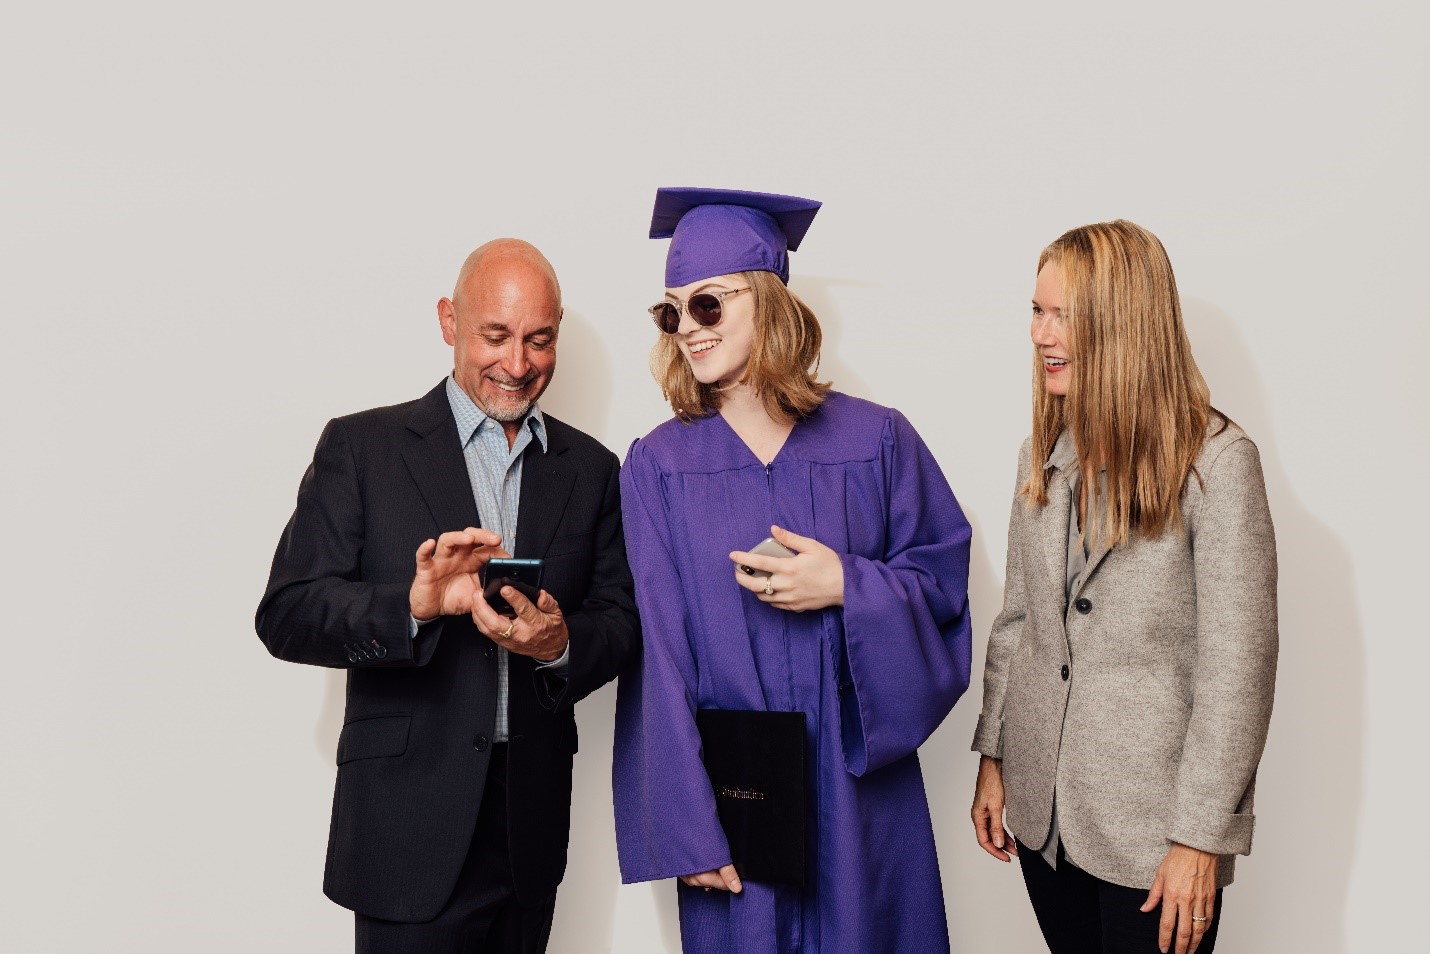 Daughter with parents at graduation